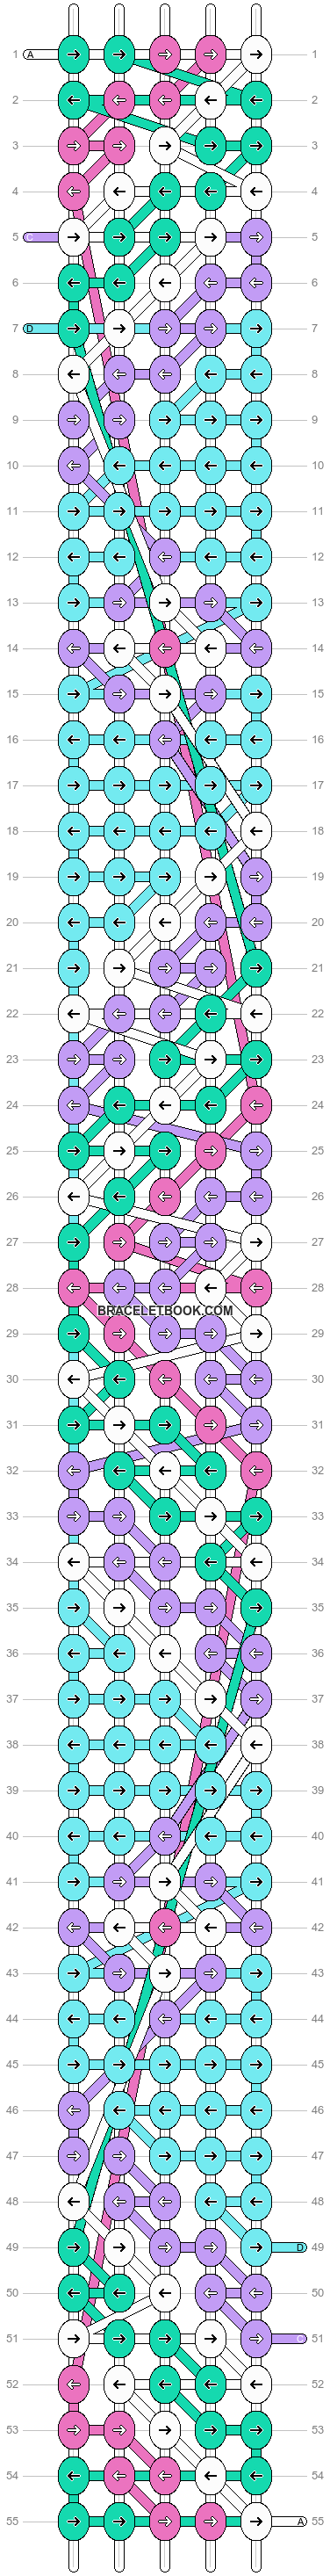 Alpha pattern #11196 variation #51830 pattern